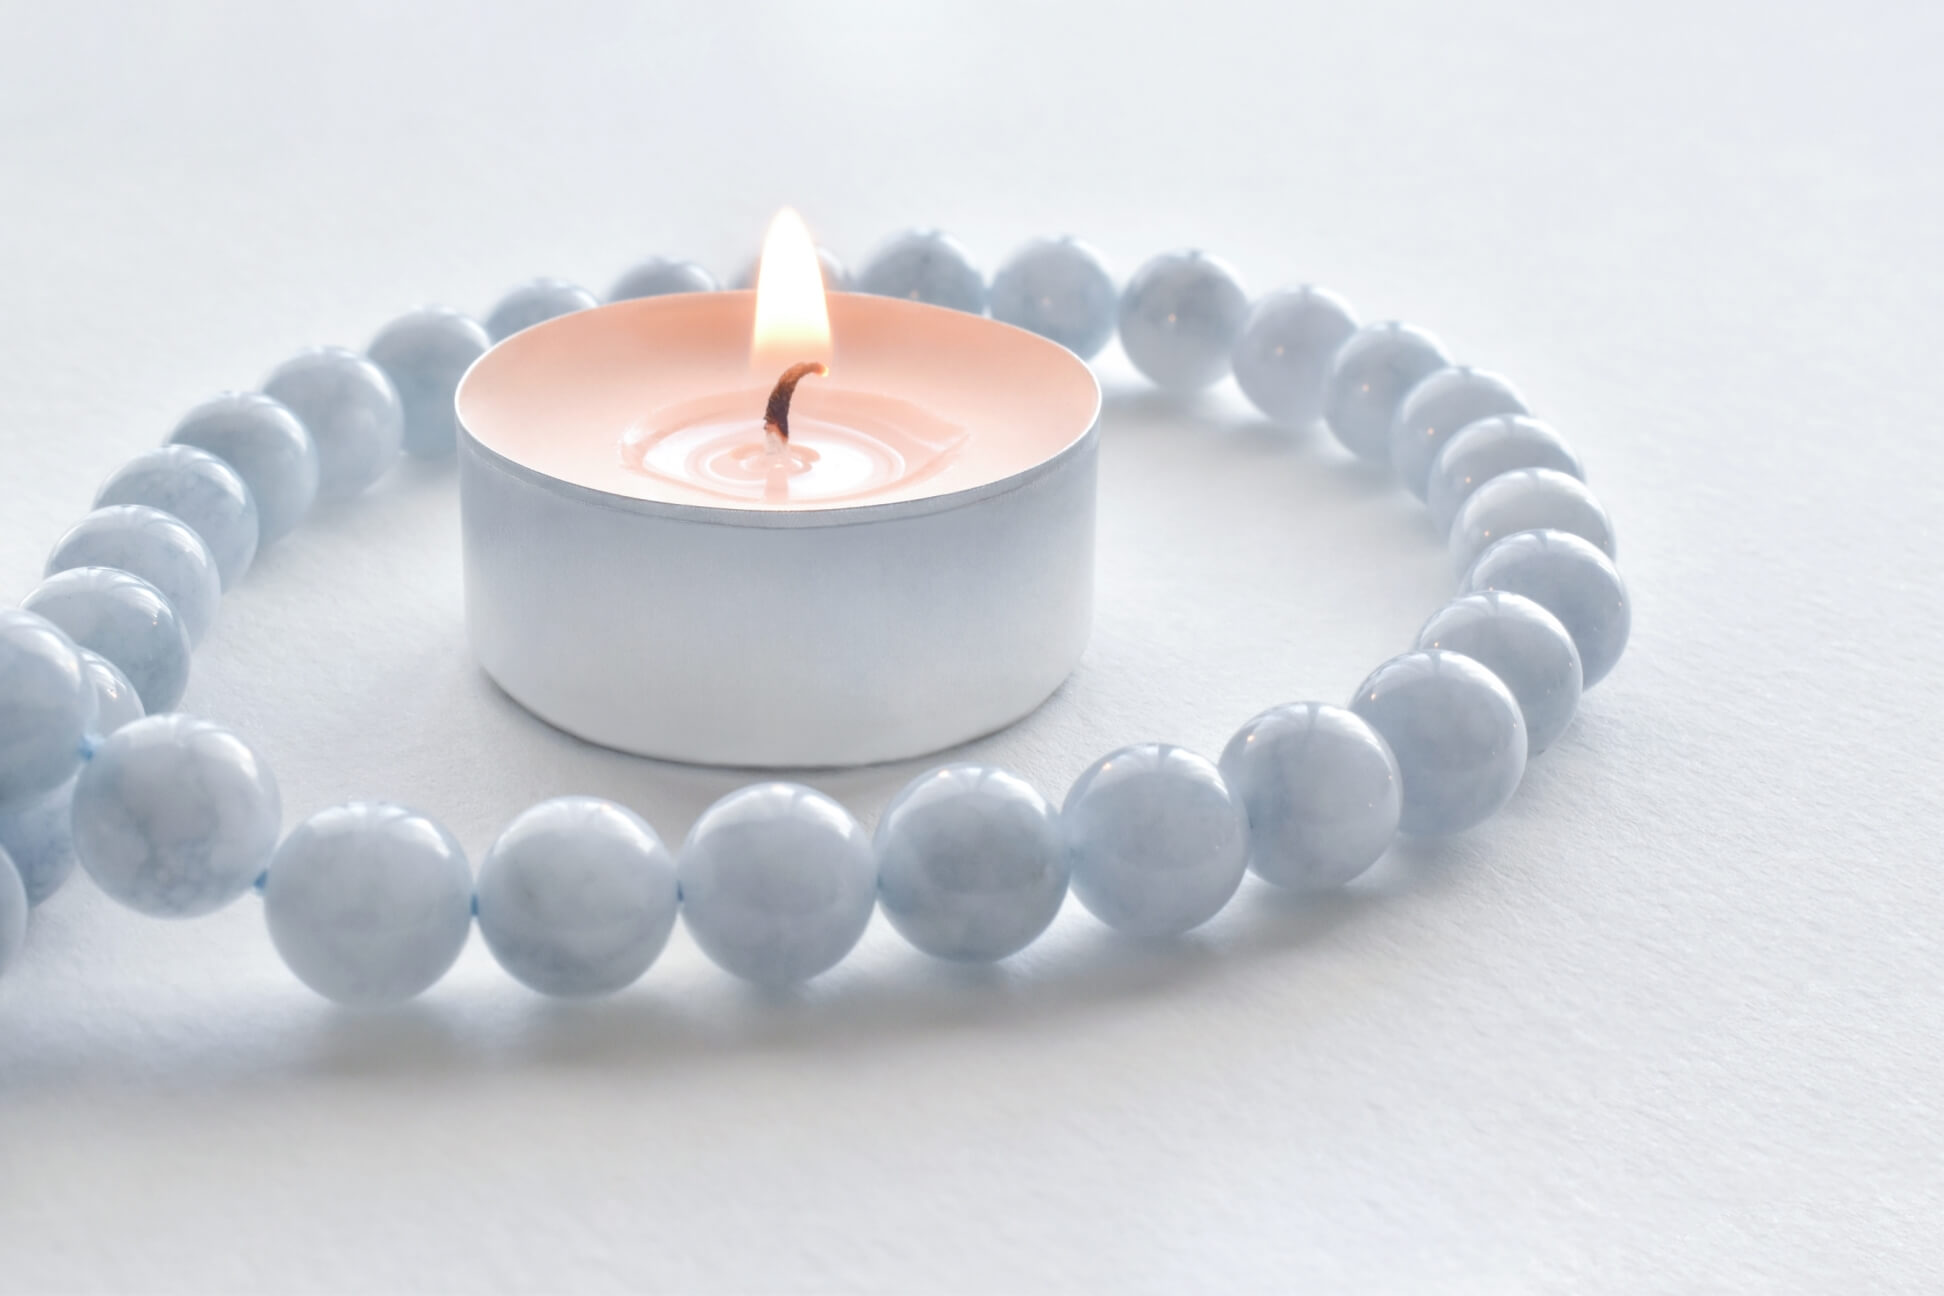 tealight candles with aquamarine necklace around i 2022 11 09 16 09 35 utc